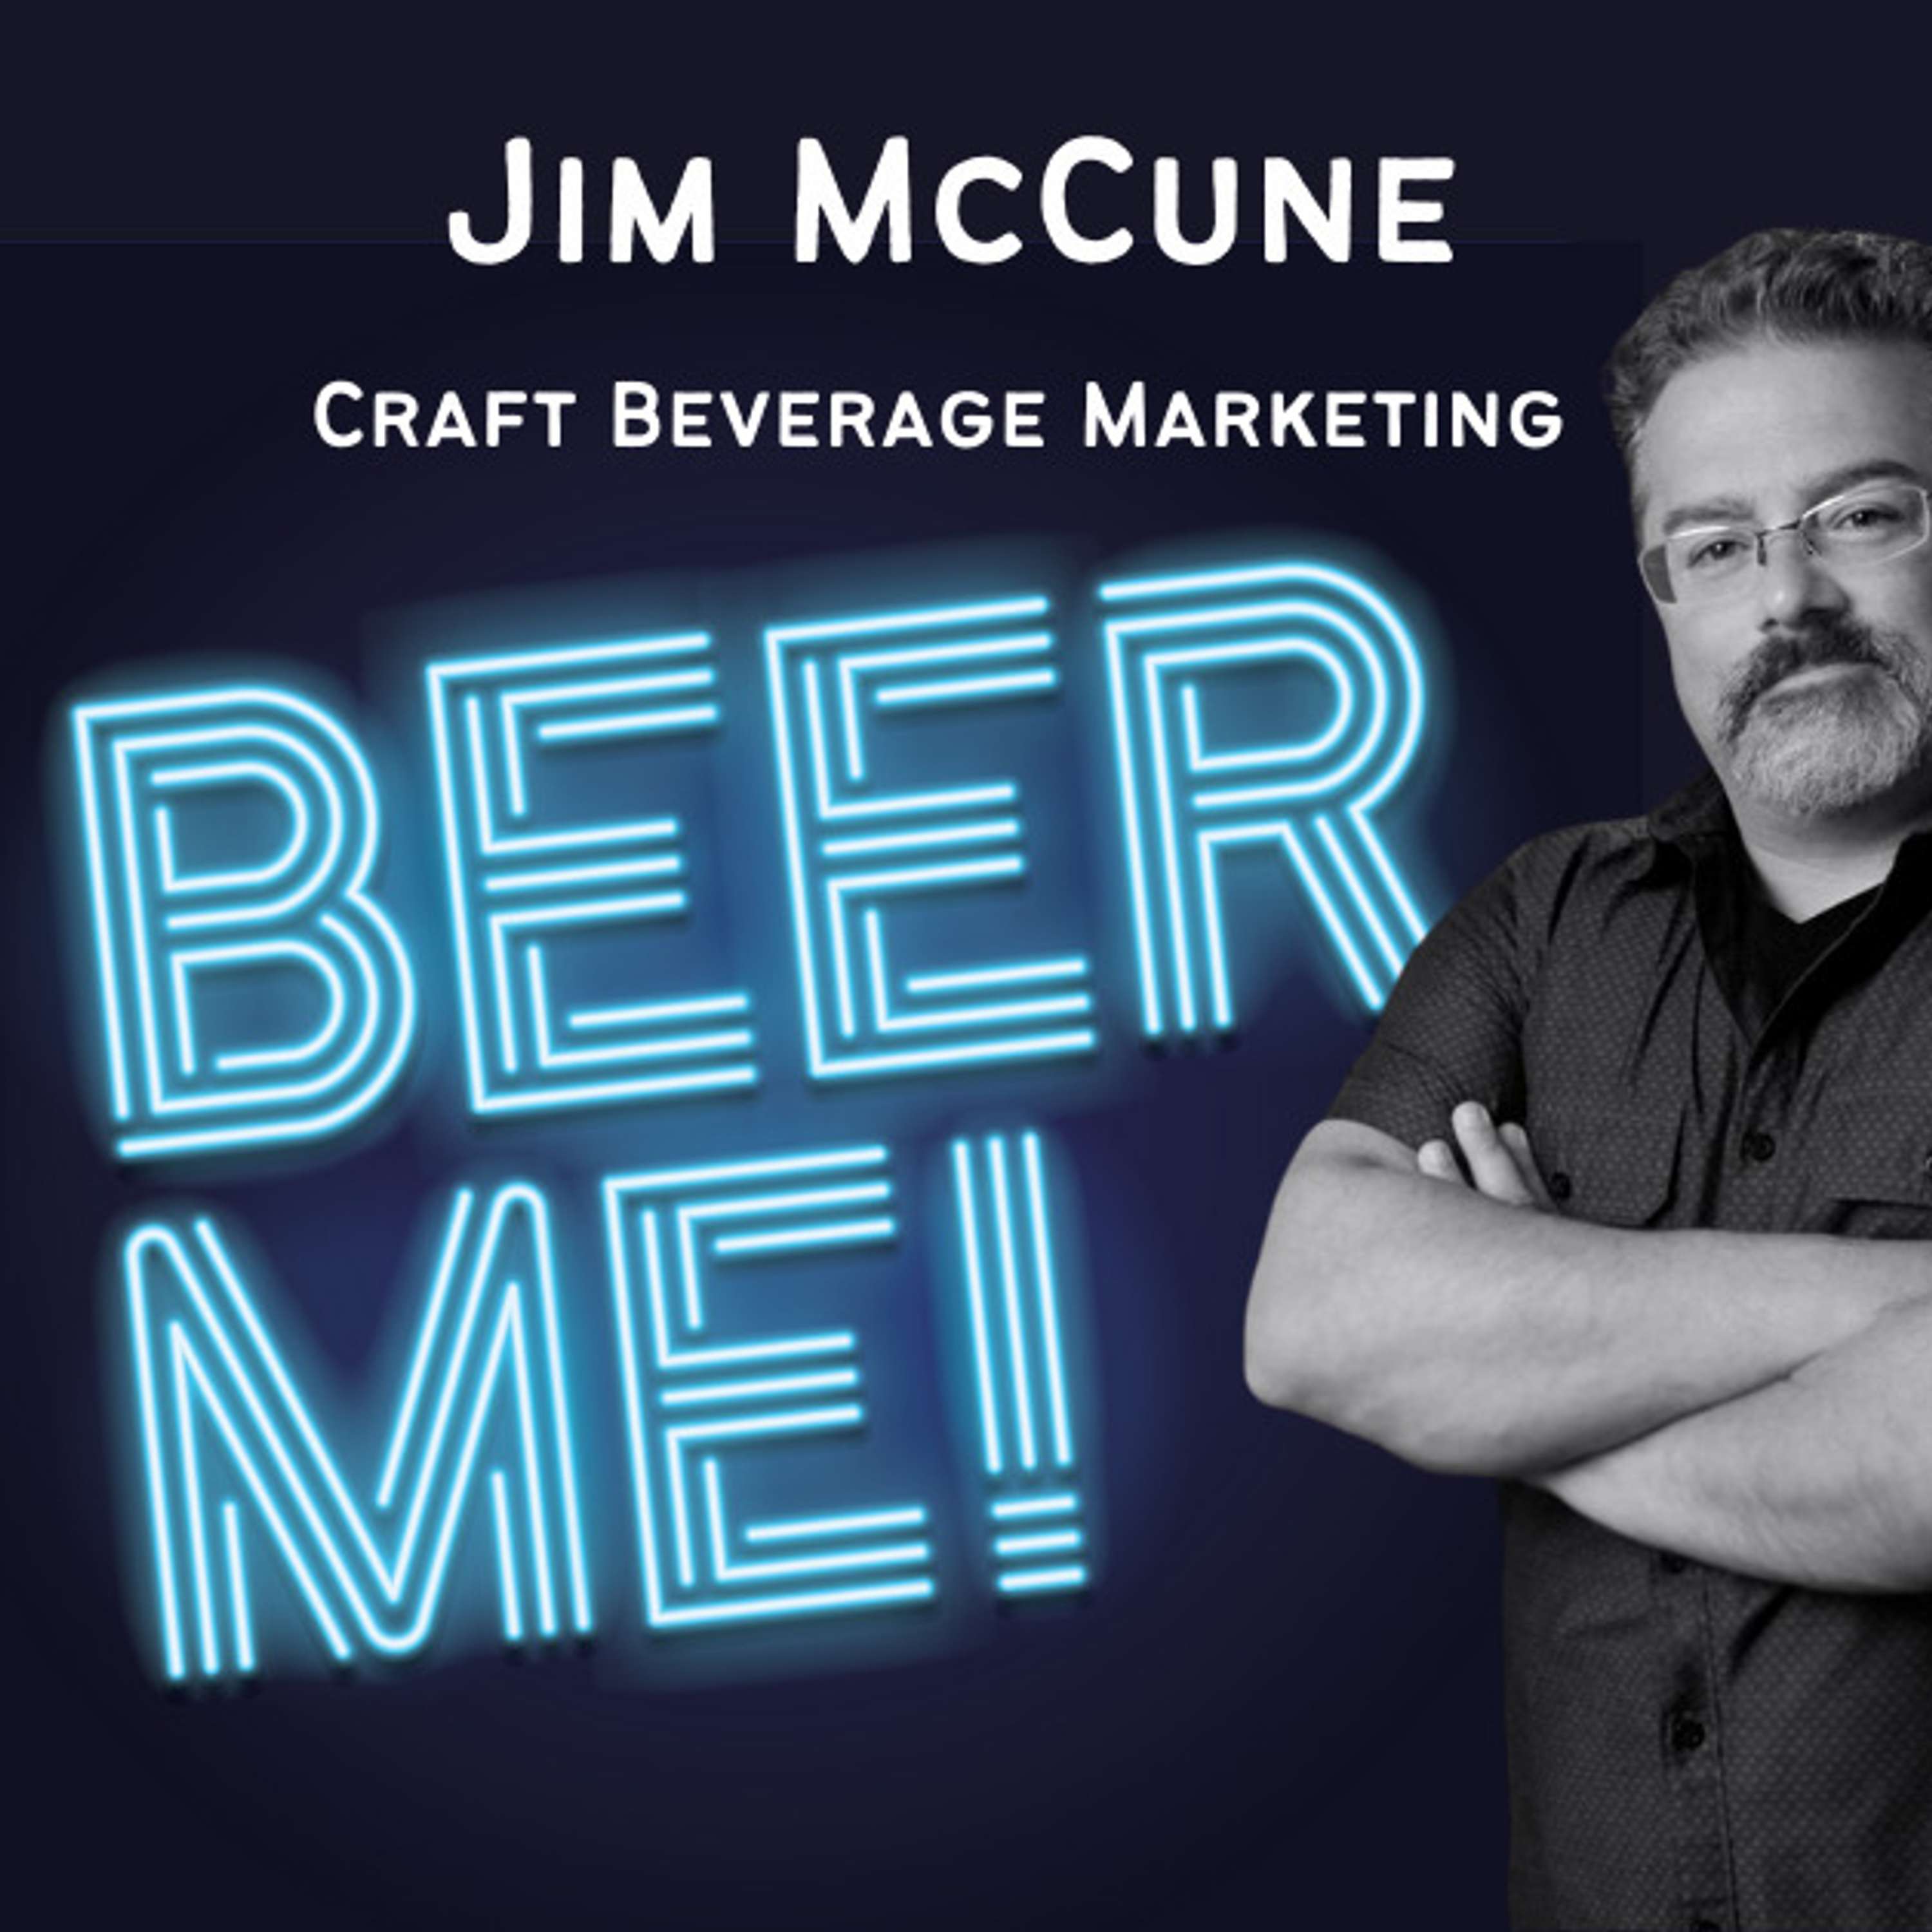 Craft Beer Marketing: Well Deserved Recognition